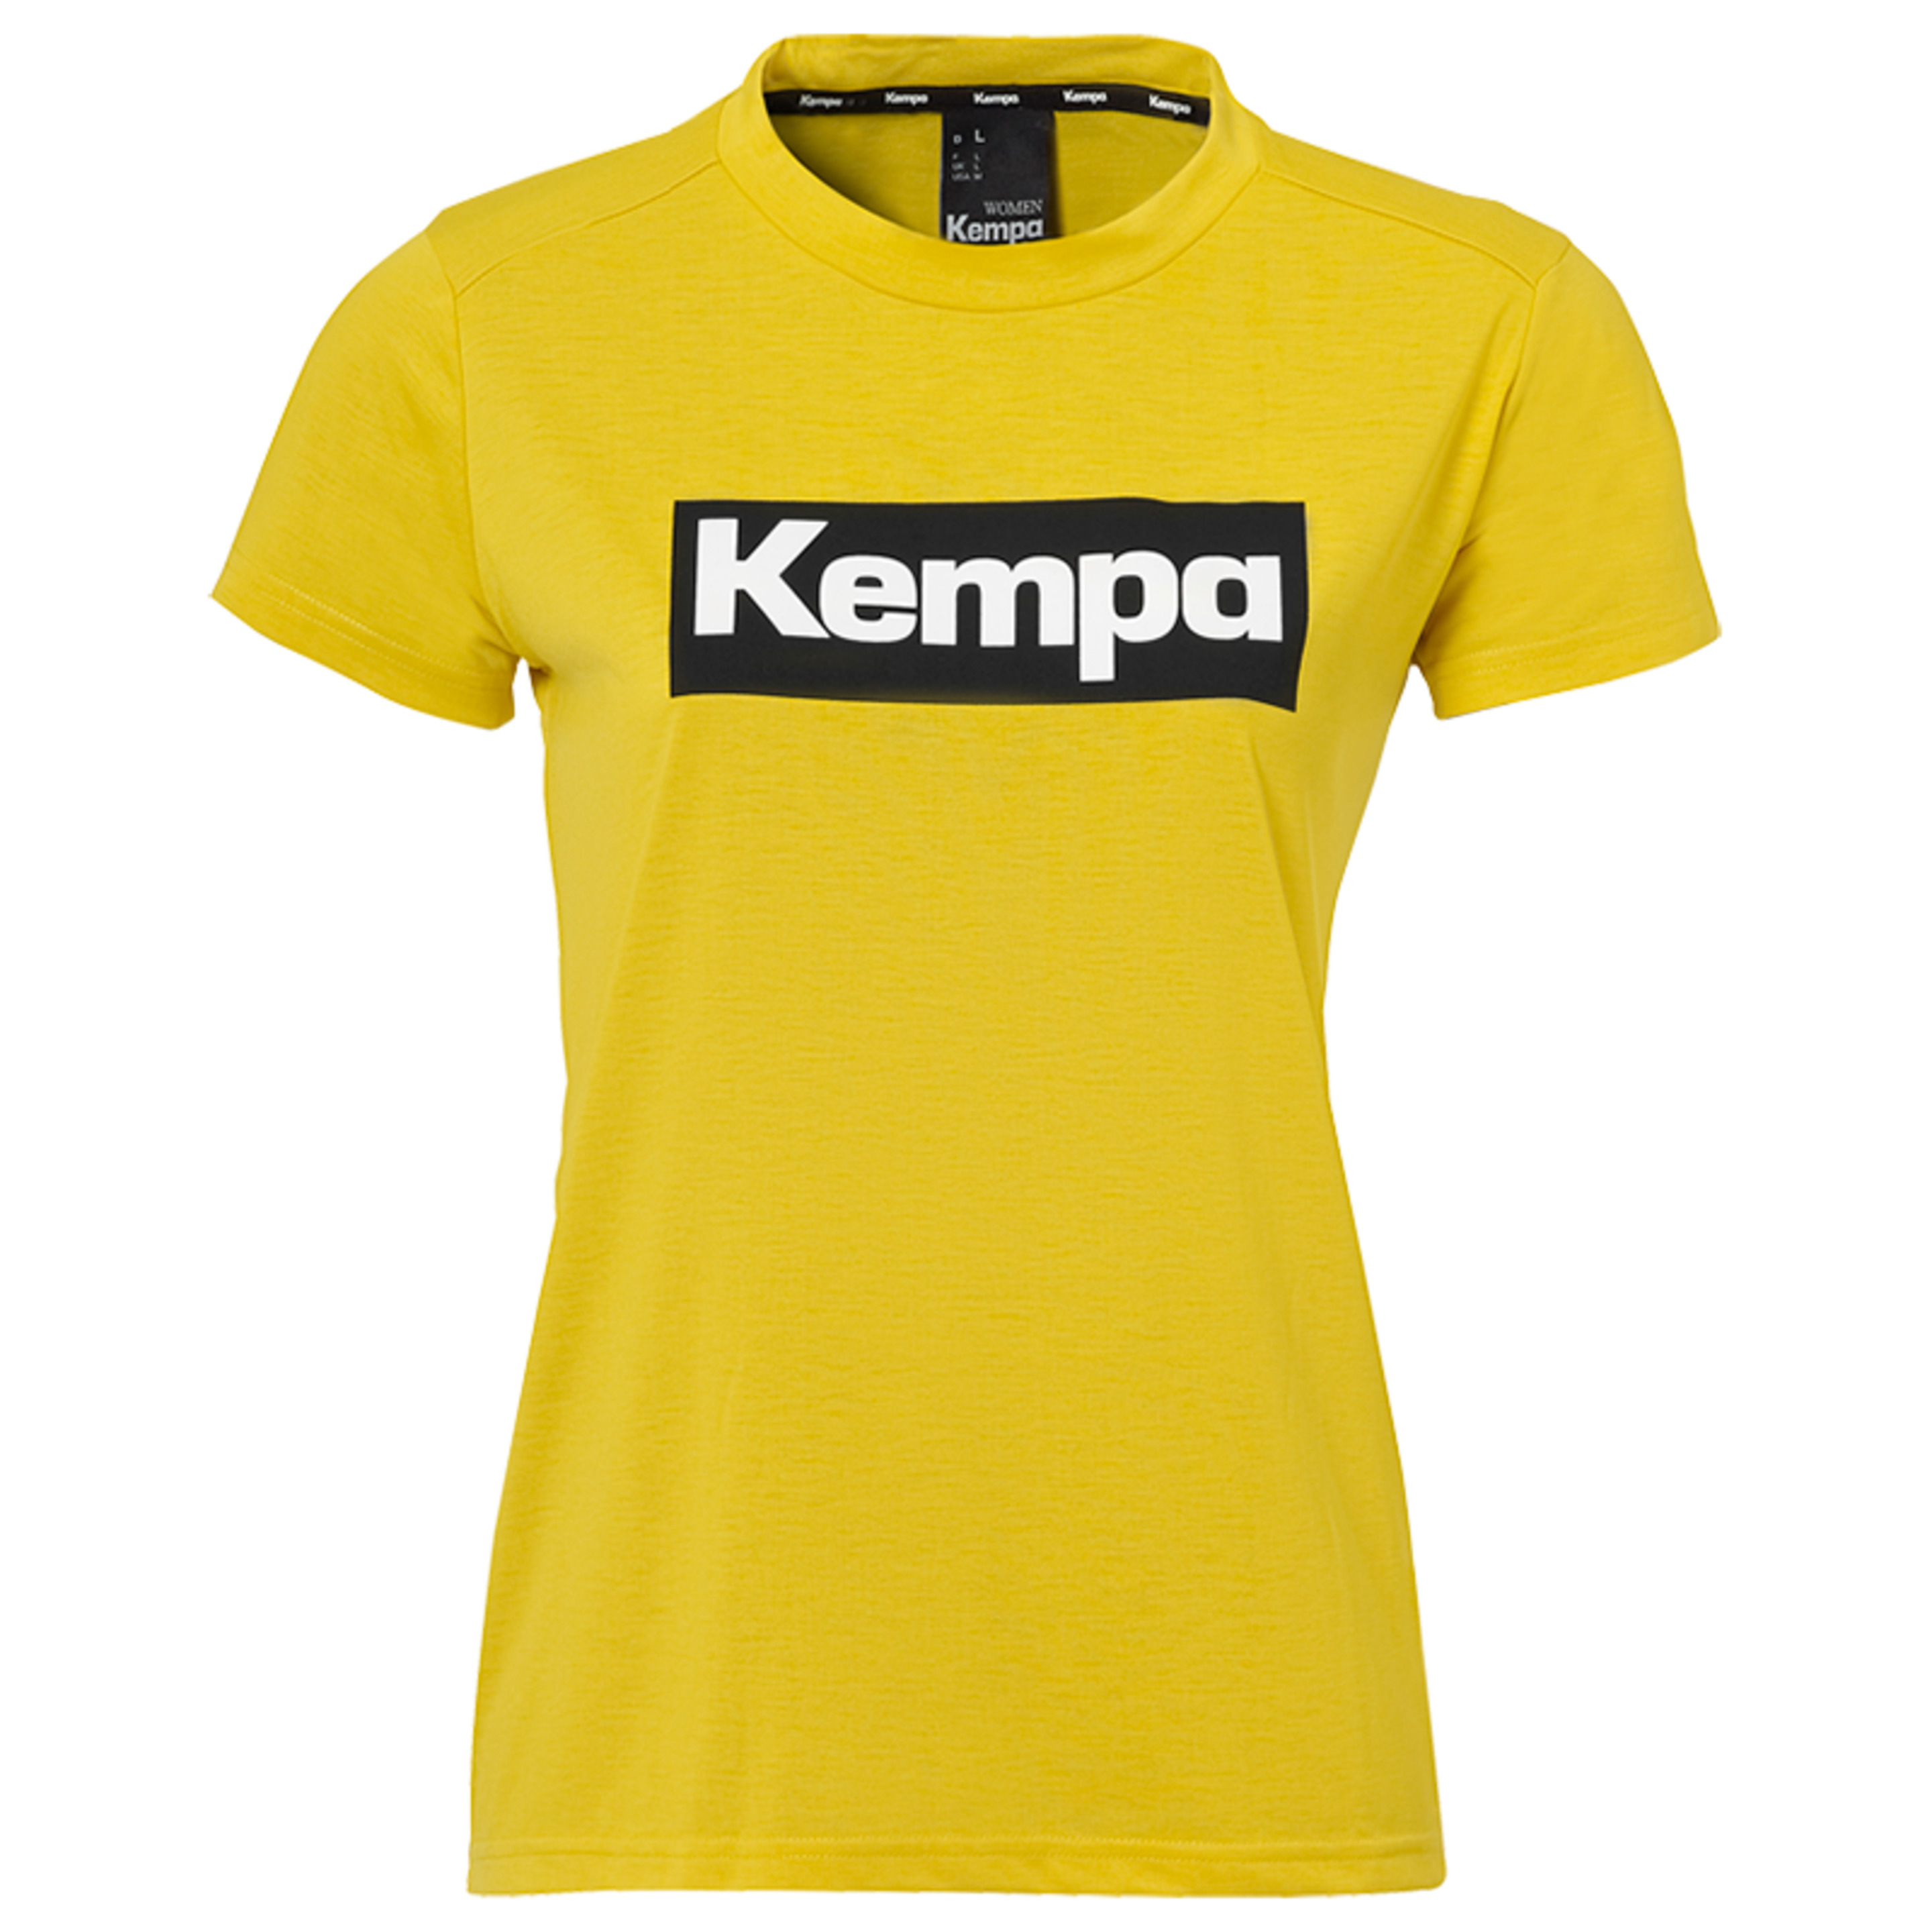 Laganda T-shirt Women Mostaza Kempa - mostaza - 